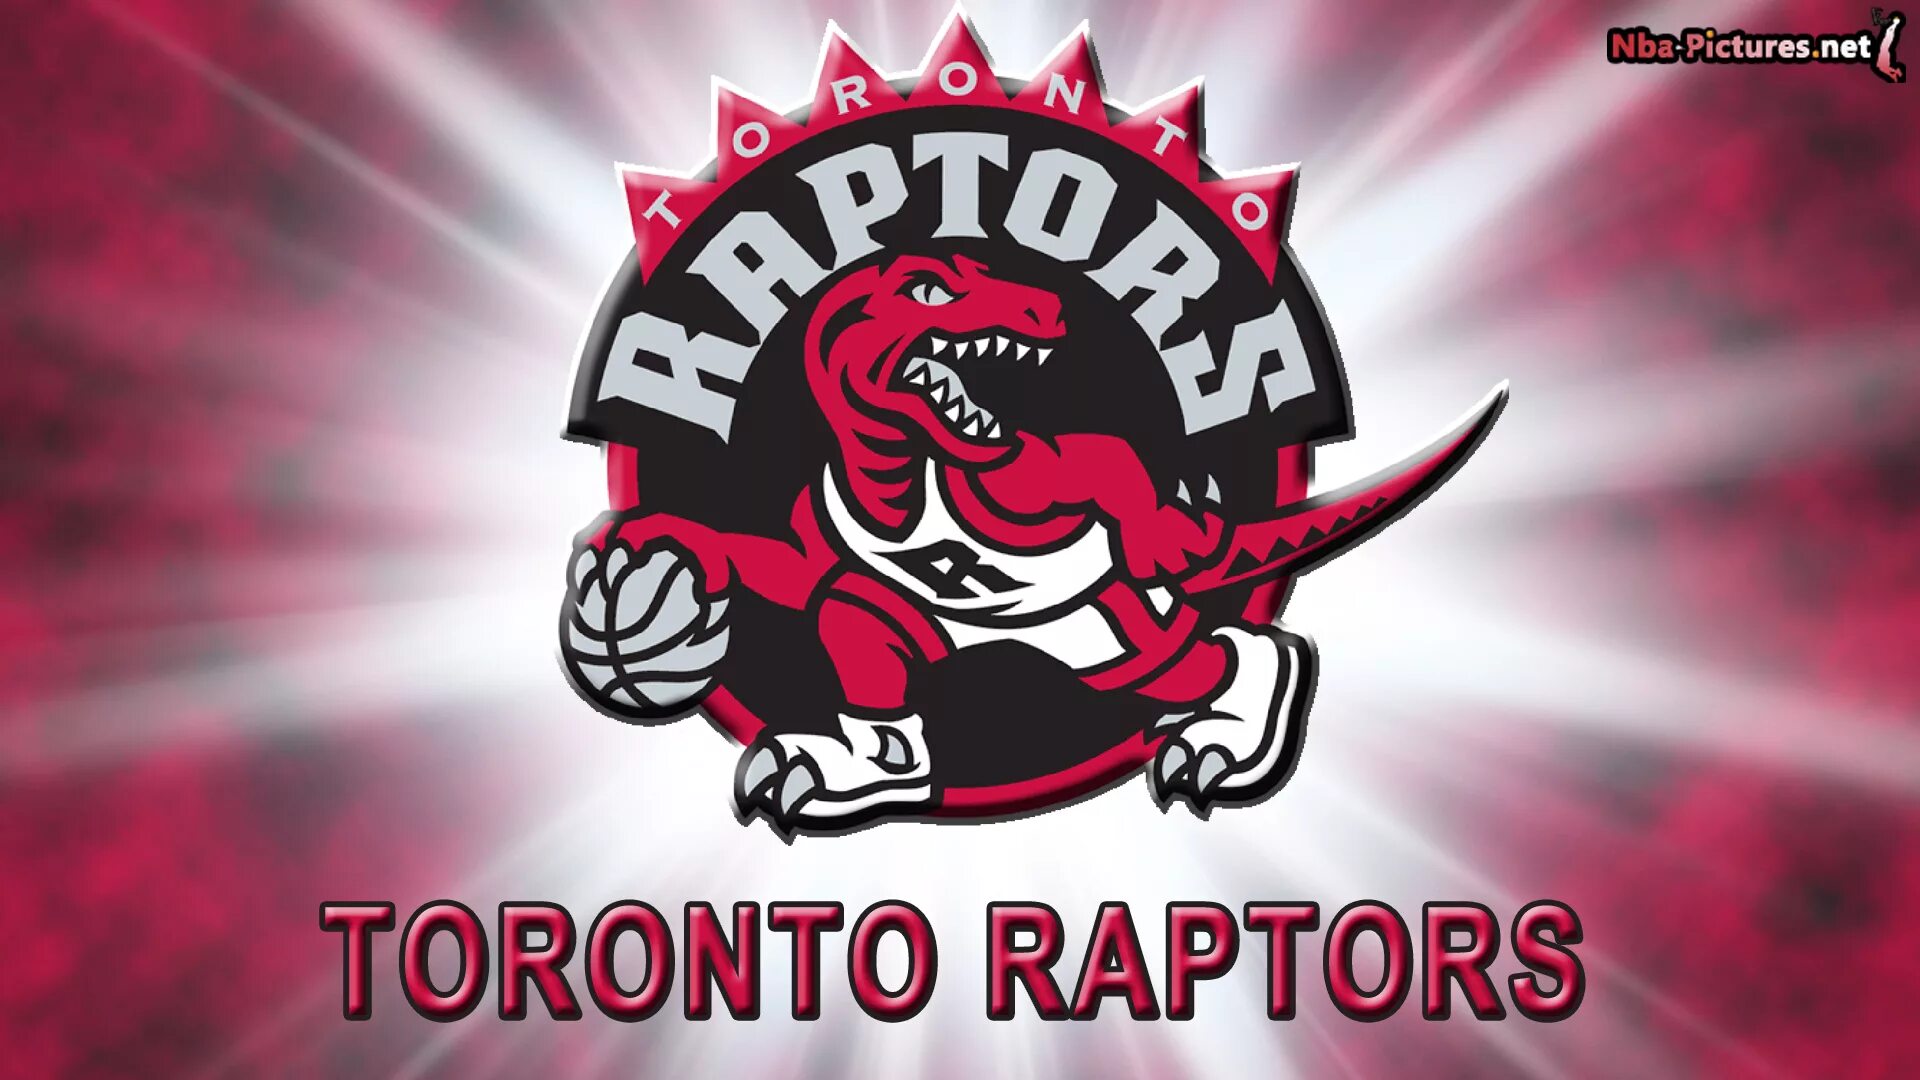 Toronto raptors. Команда Toronto Raptors. Торонто Рэпторс лого. Торонто НБА логотип.